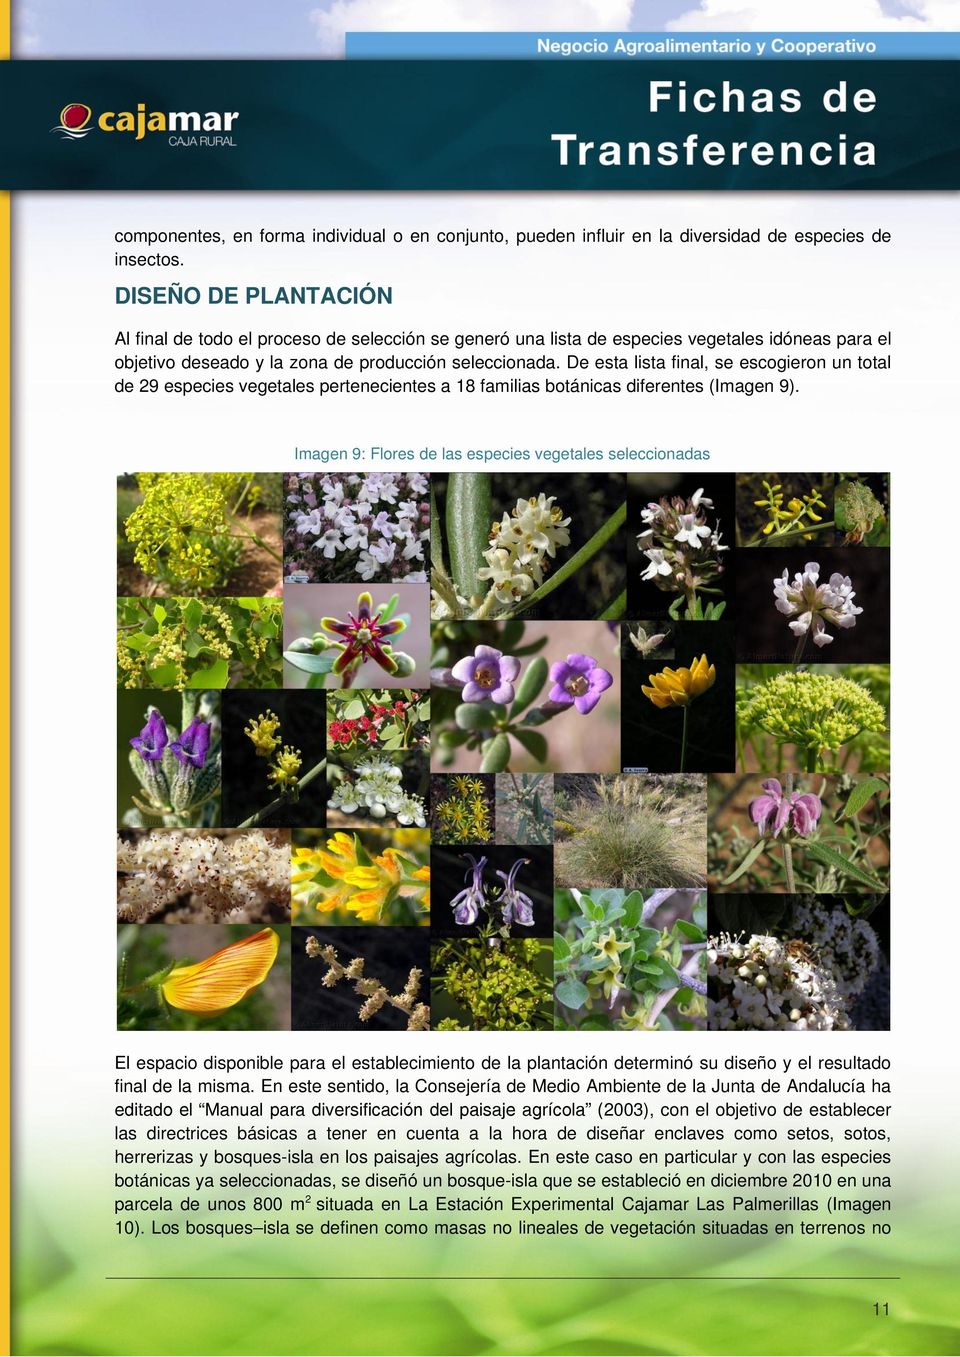 De esta lista final, se escogieron un total de 29 especies vegetales pertenecientes a 18 familias botánicas diferentes (Imagen 9).